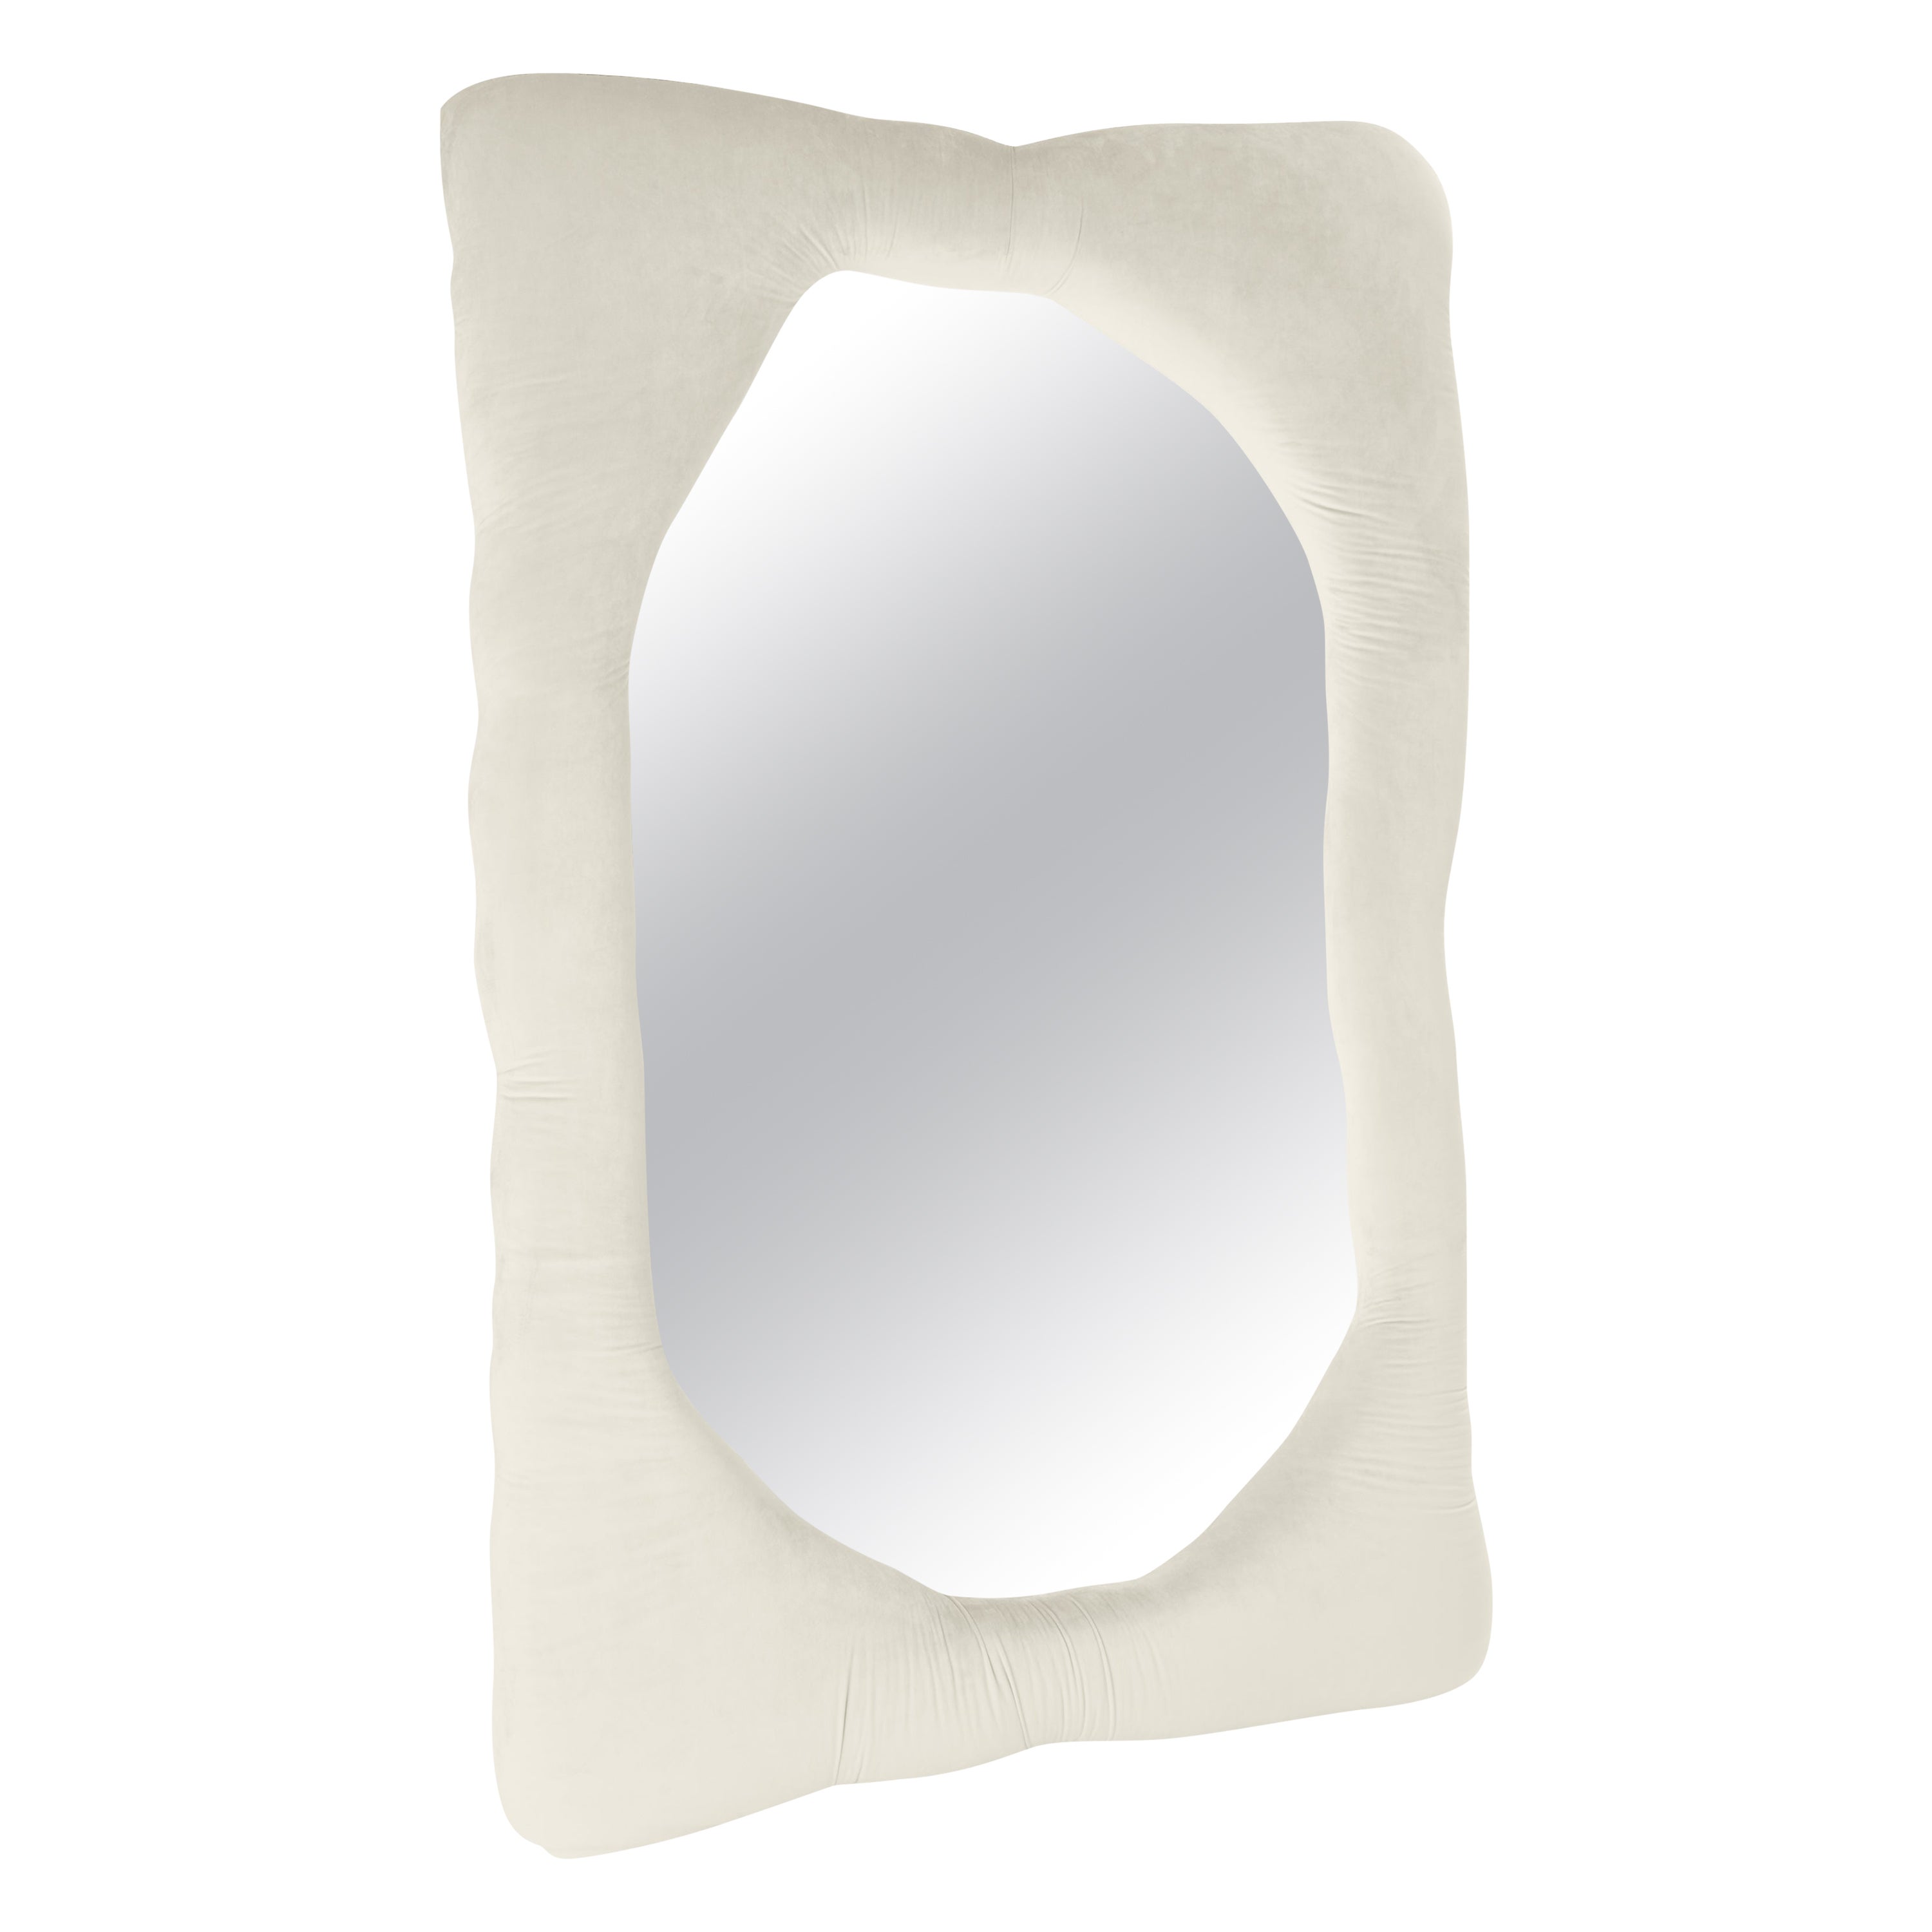 Velvet Biomorphic Mirror in Camelia by Brandi Howe, REP by Tuleste Factory For Sale